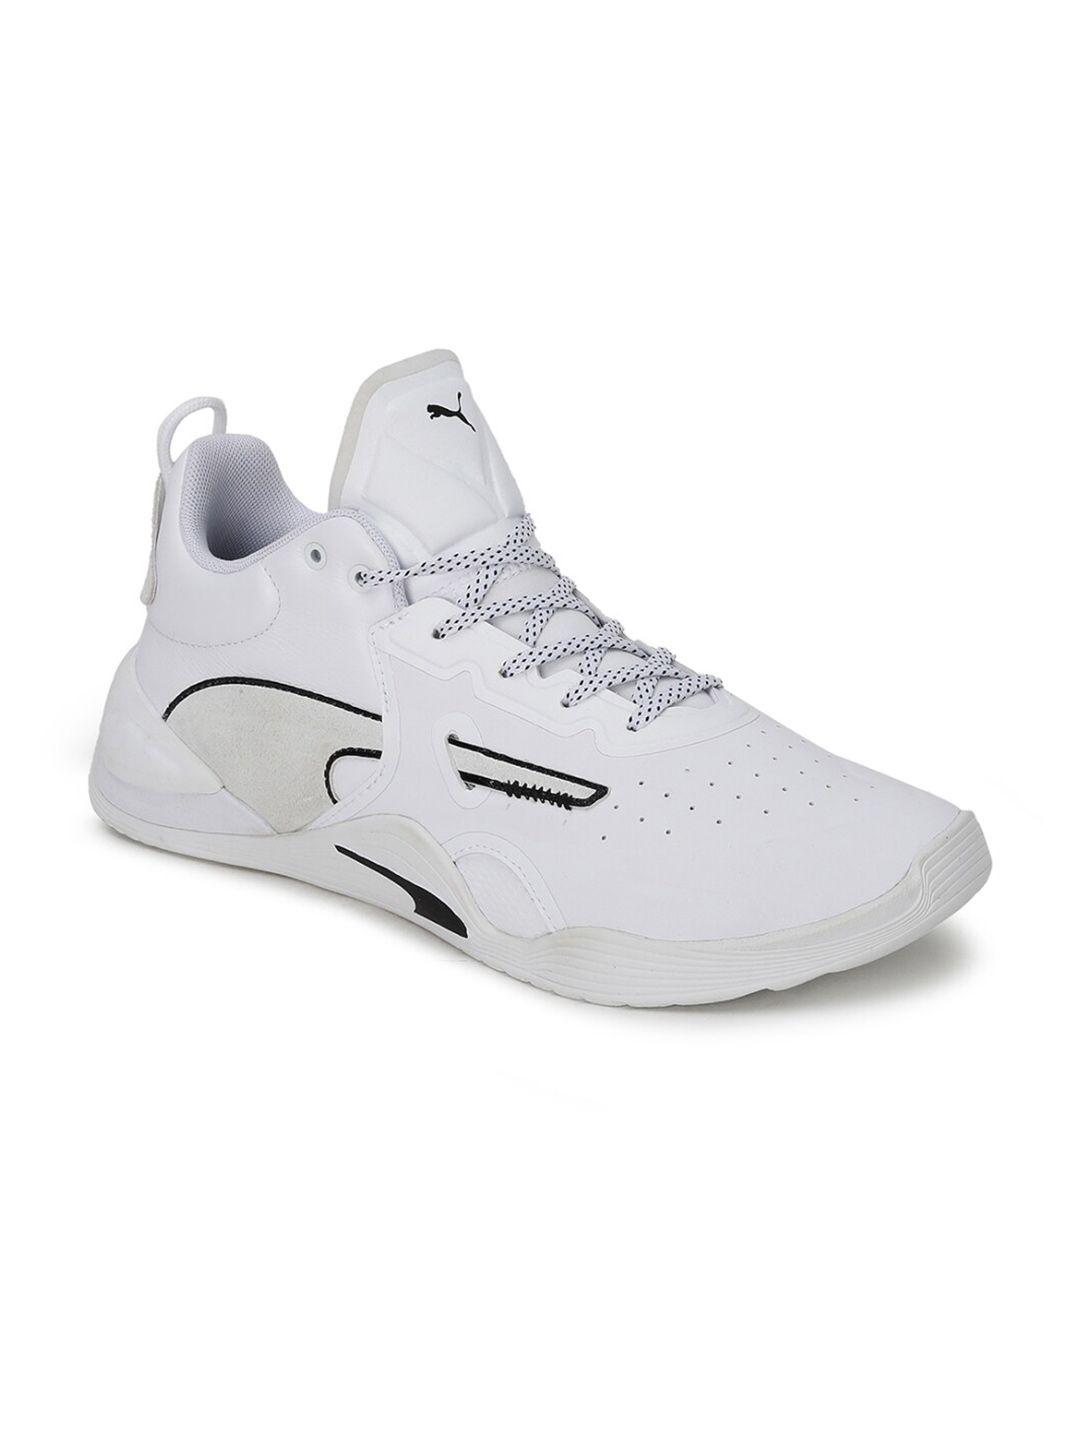 puma-men-white-fuse-performance-leather-training-shoes